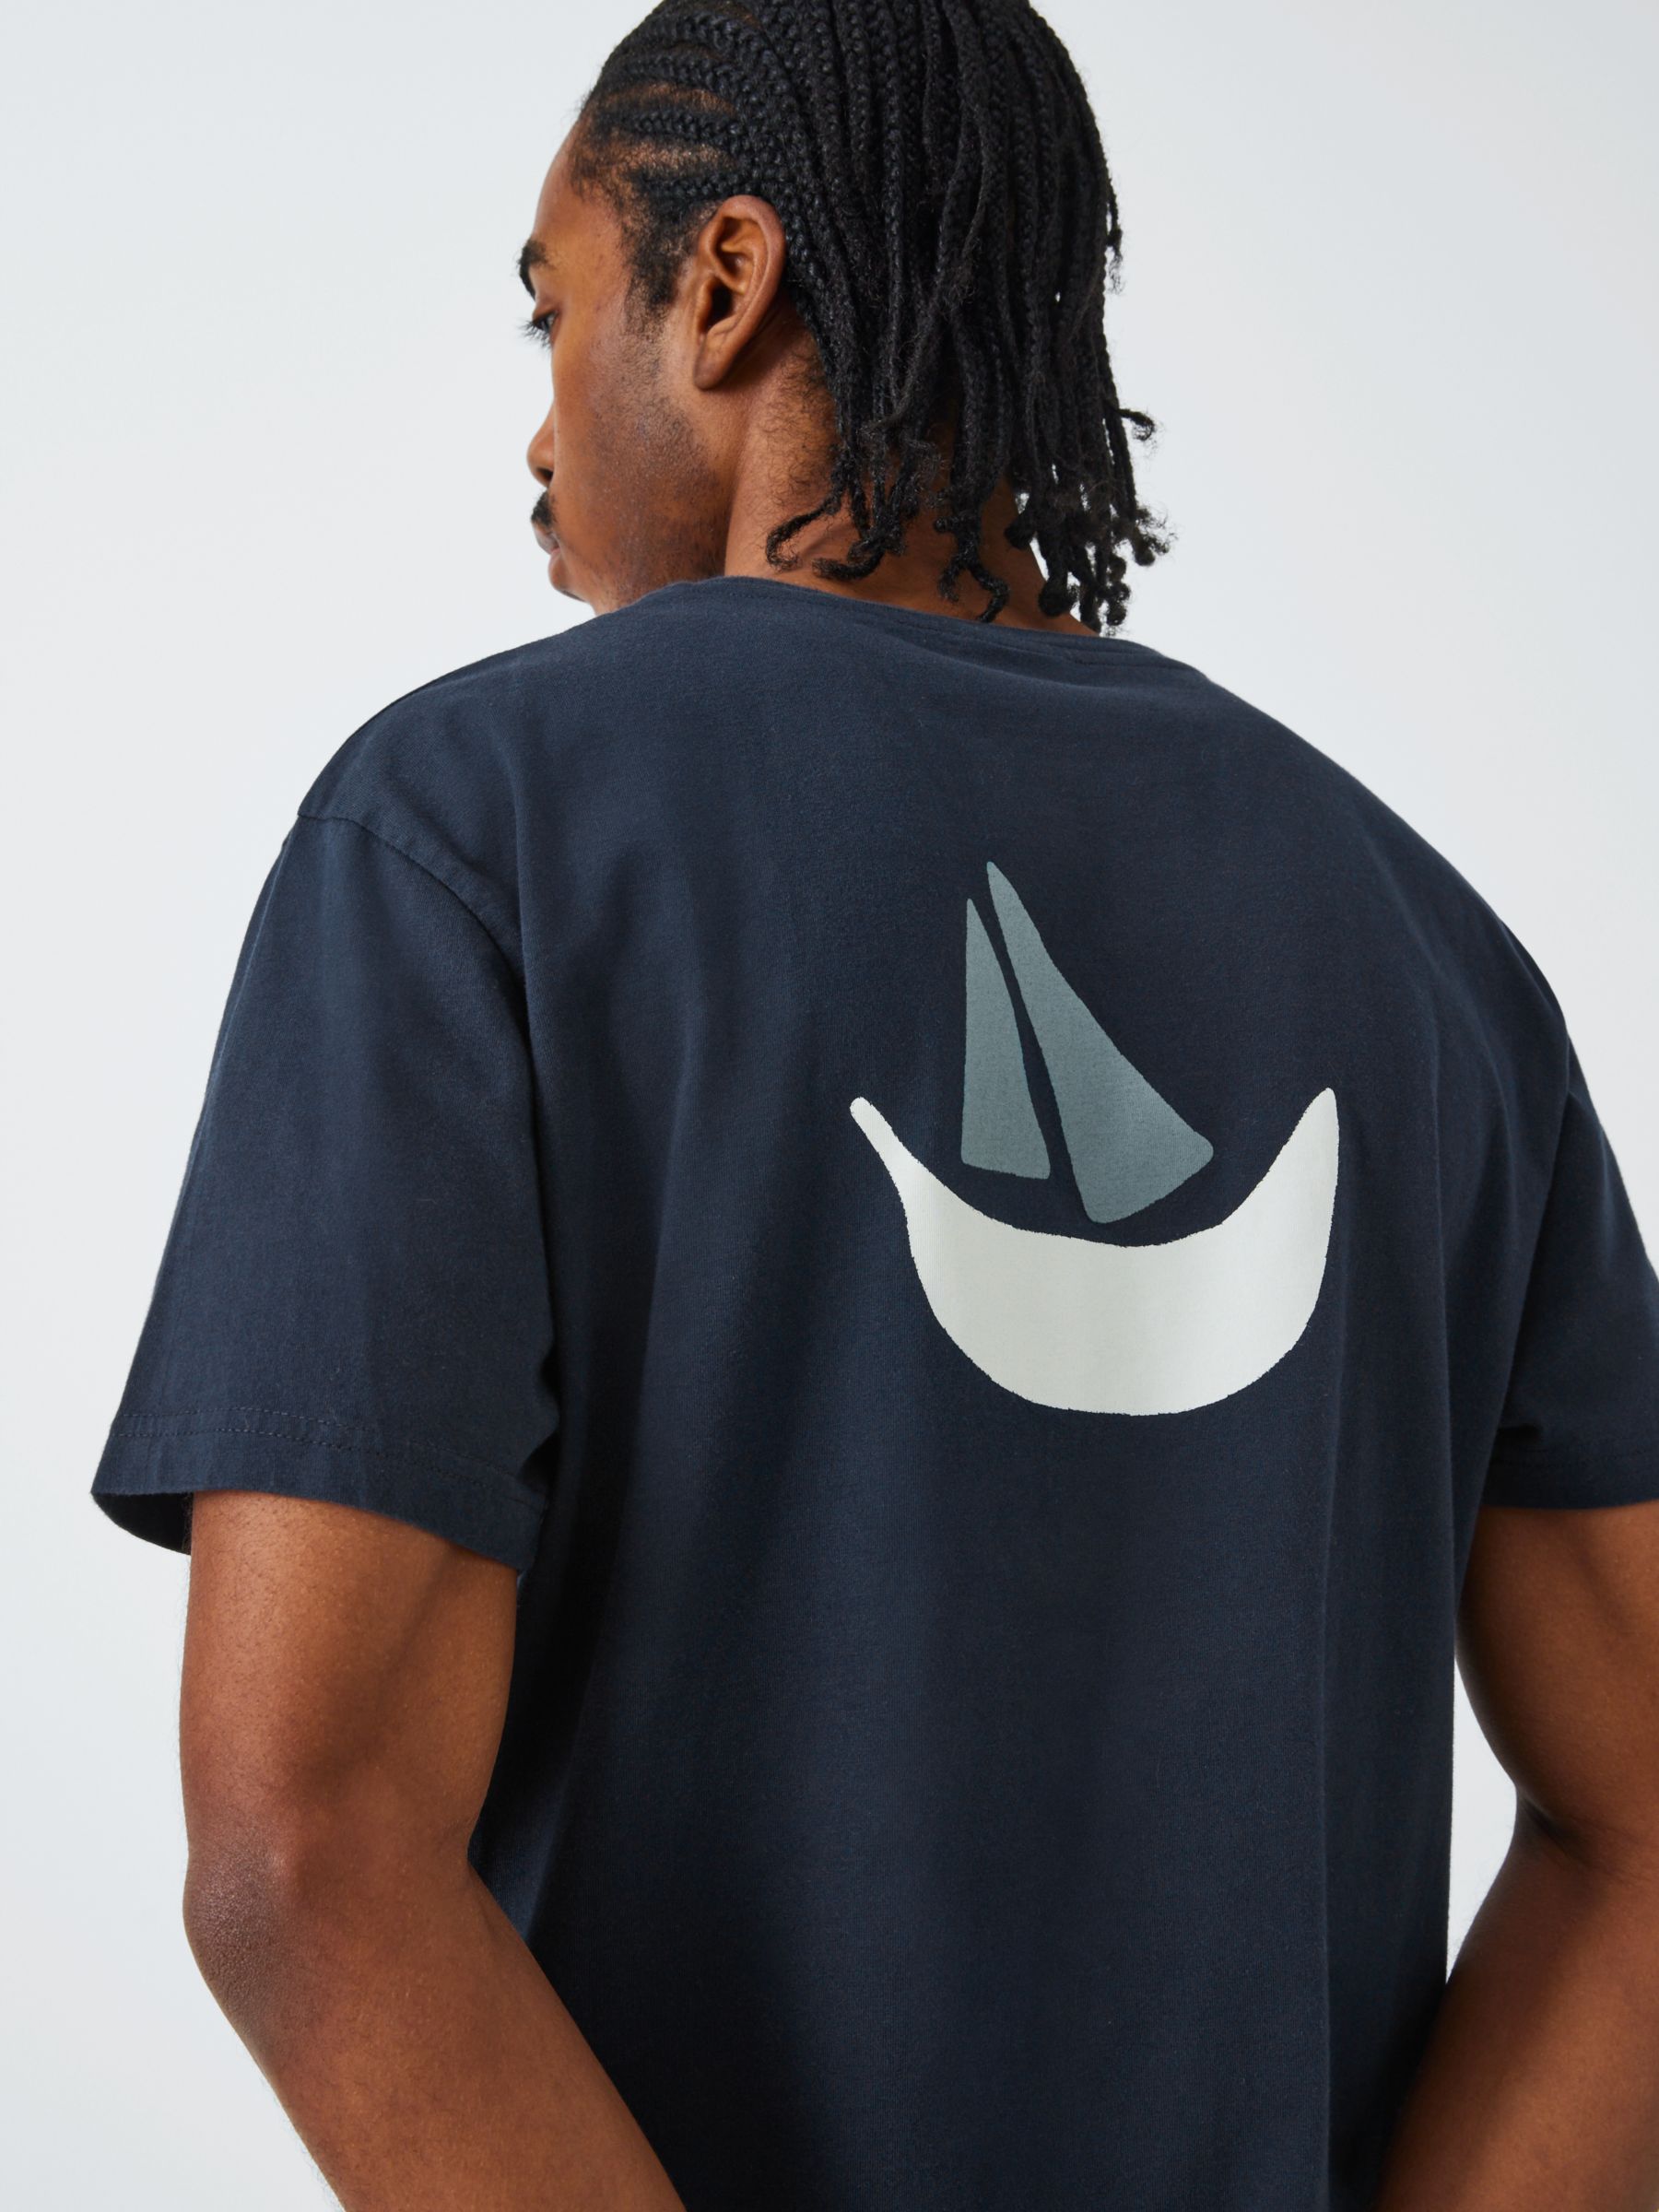 La Paz Print T-Shirt, Dark Navy, M